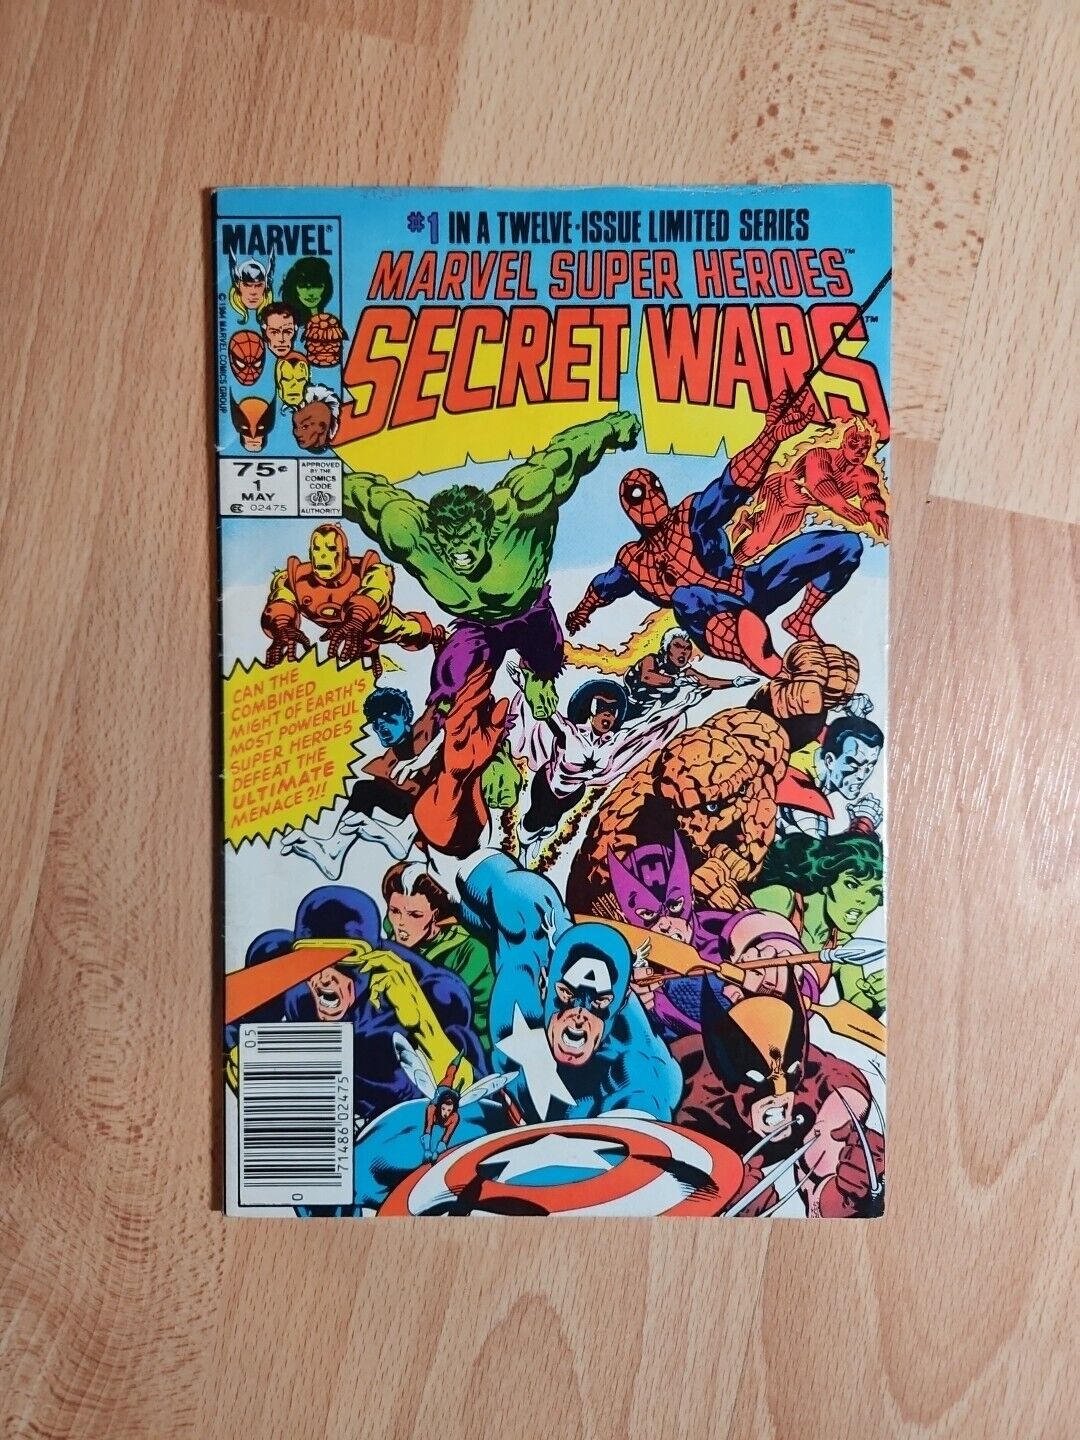 Marvel Super-Heroes Secret Wars #1 (Marvel Comics May 1984)